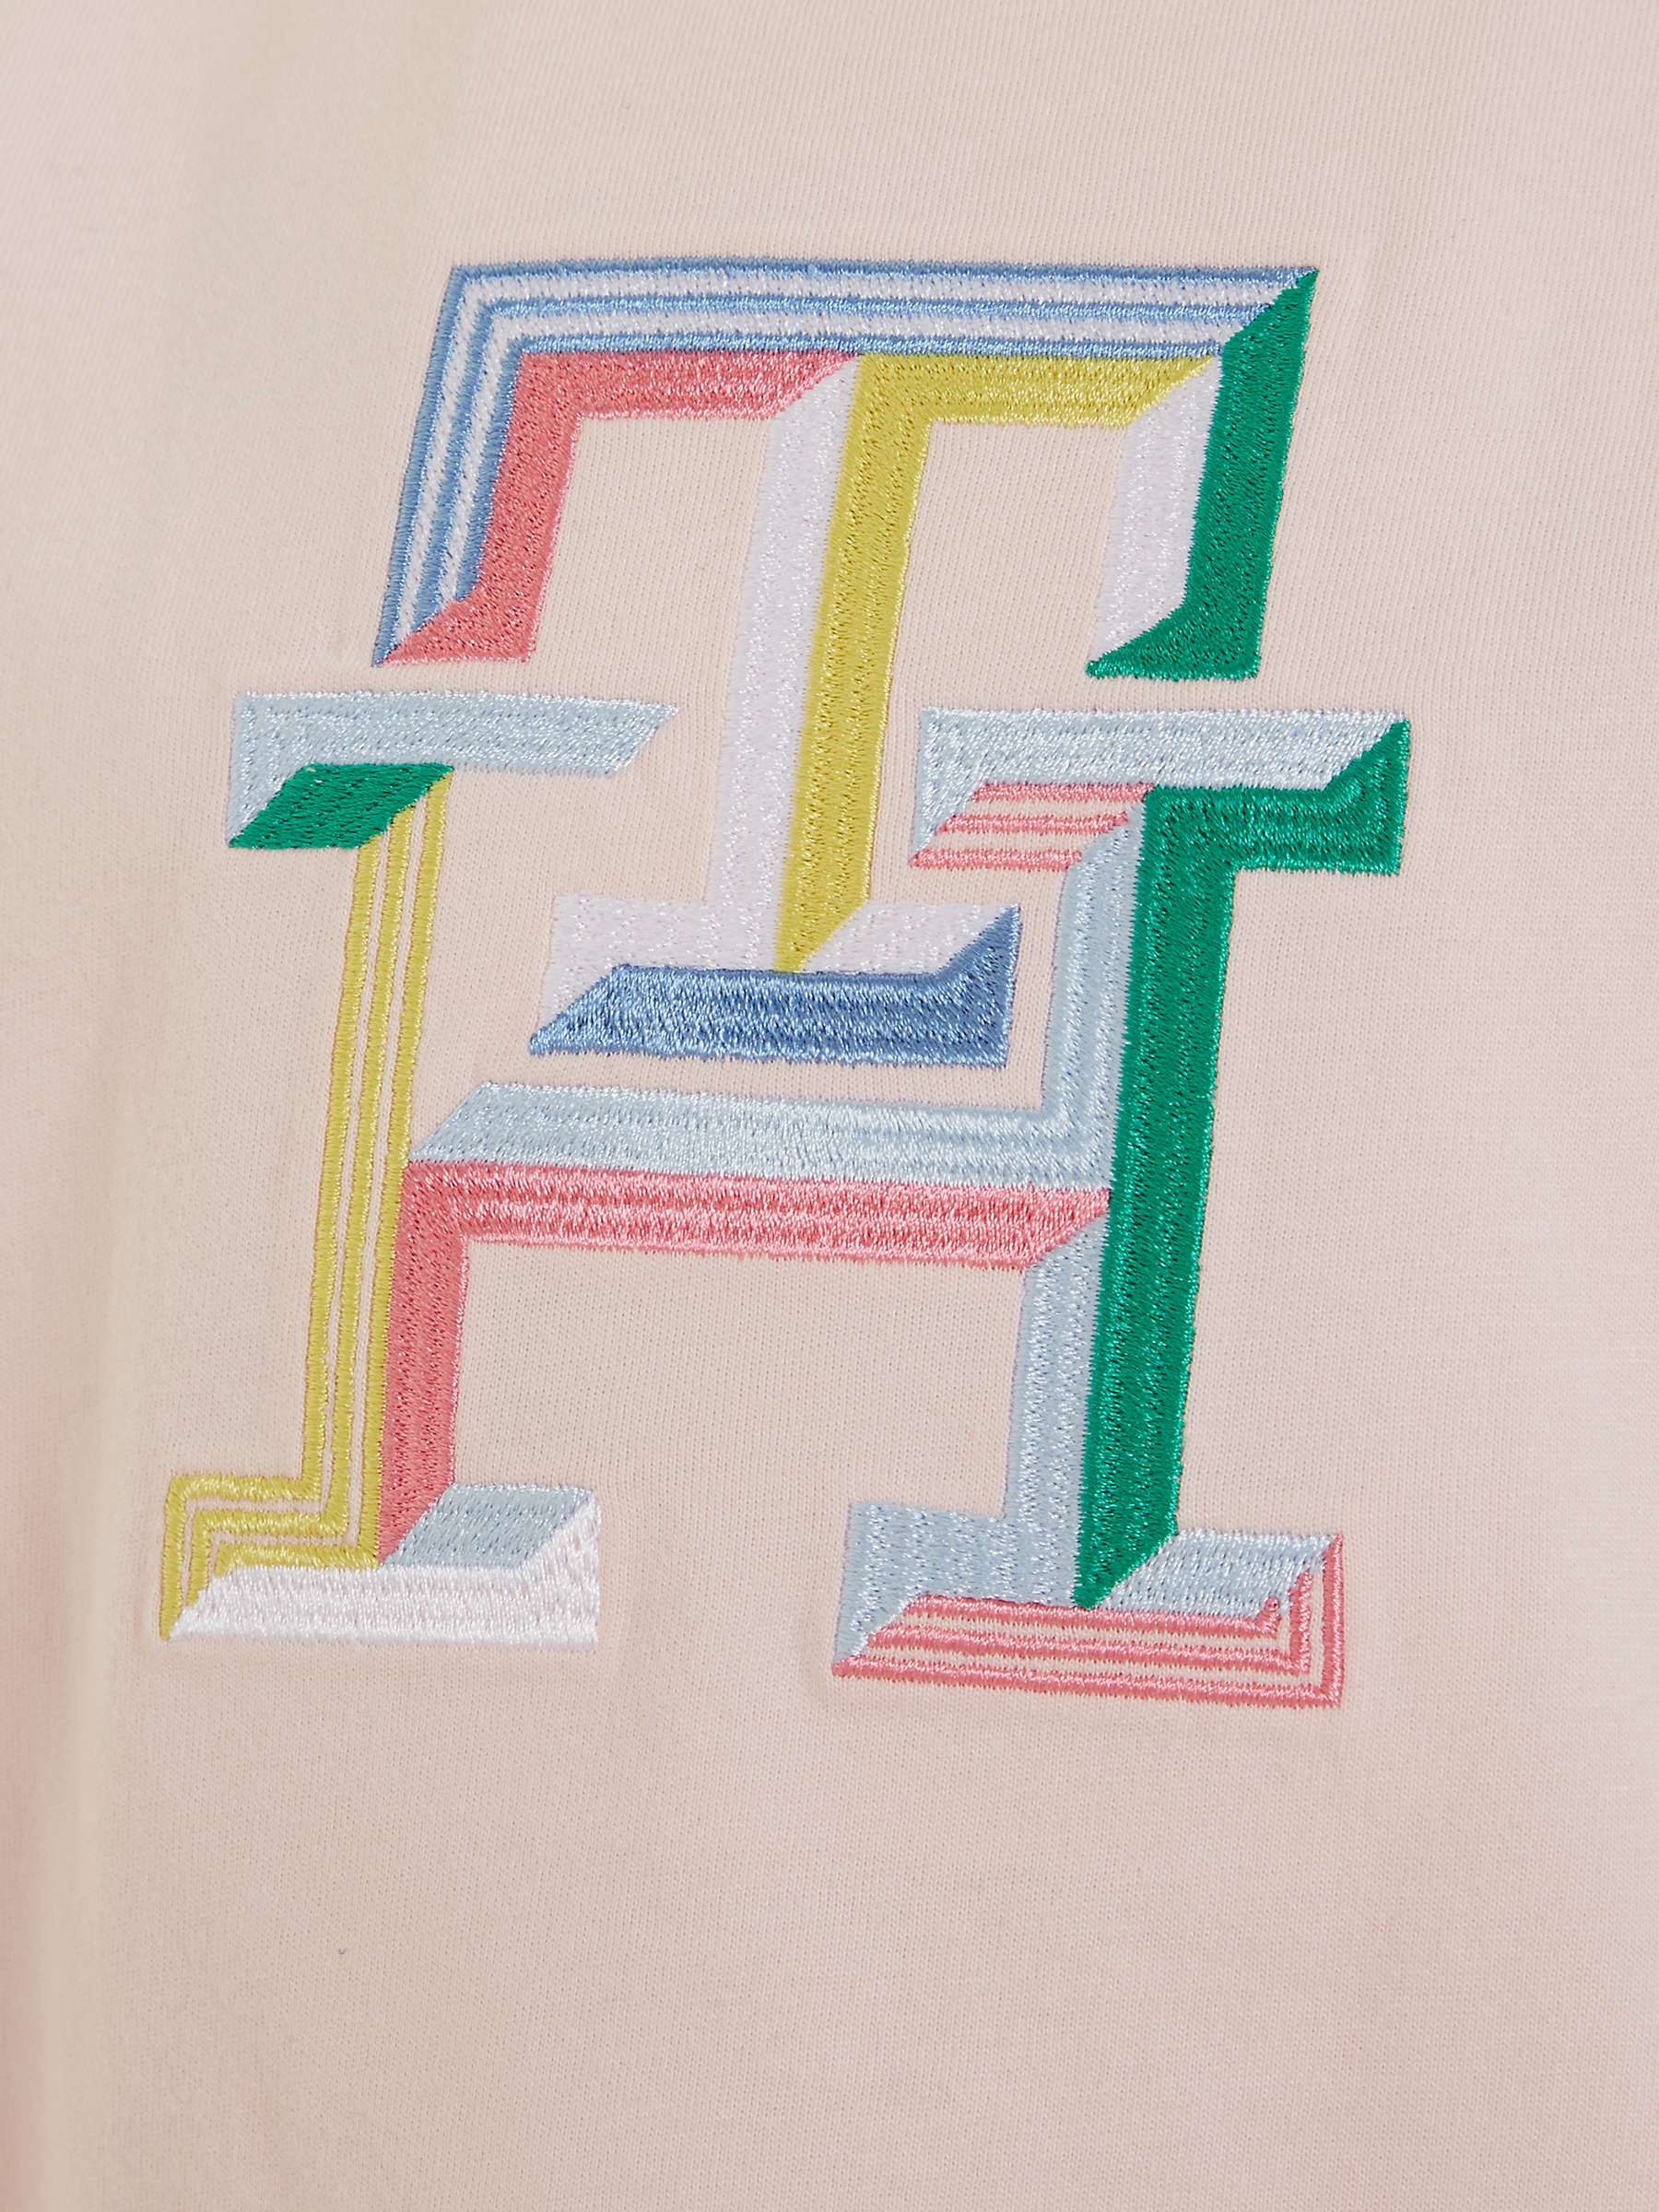 Buy Tommy Hilfiger Kids' Rainbow Monogram T-Shirt, Whimsy Pink/Multi Online at johnlewis.com